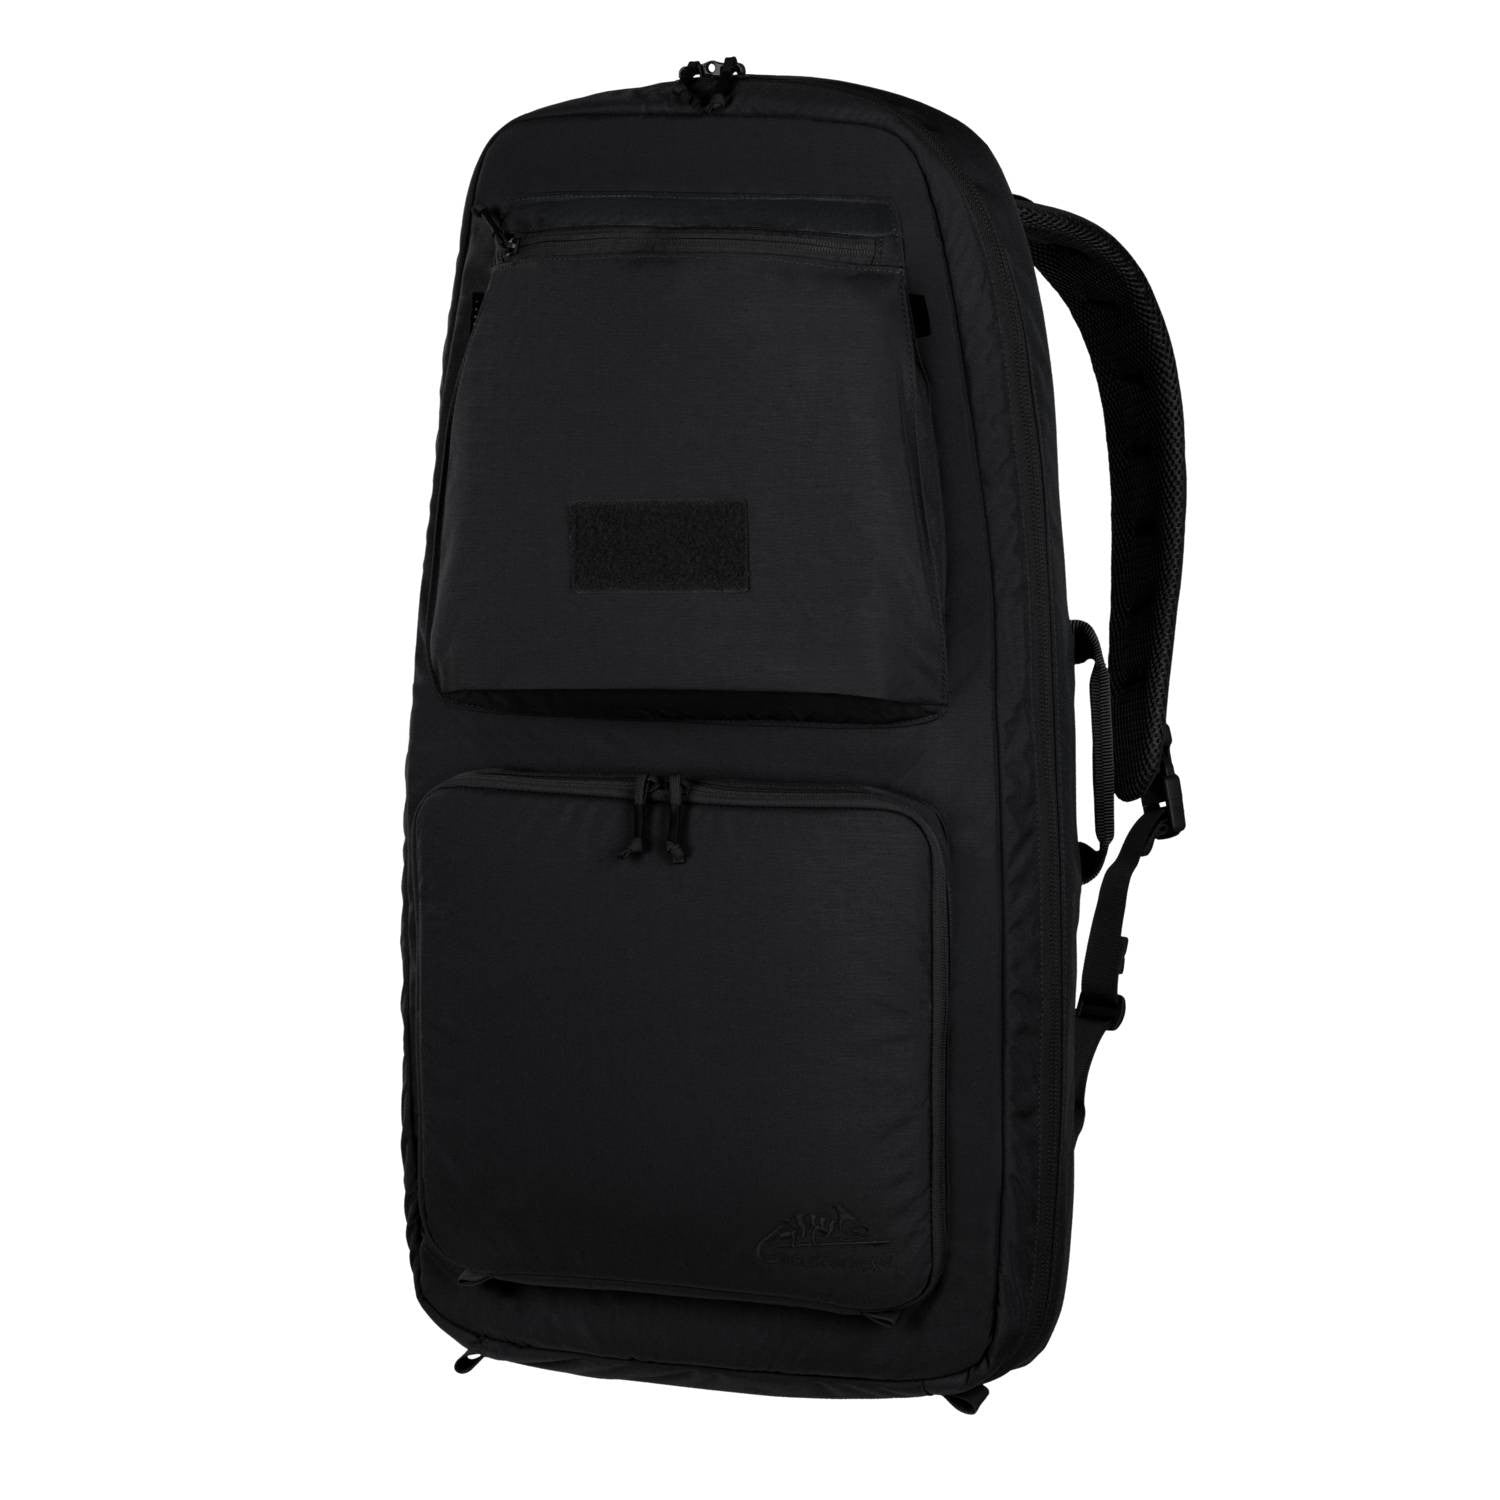 Security Bag Range Bag Laptop Bag Lockable Carry Bag SWAT